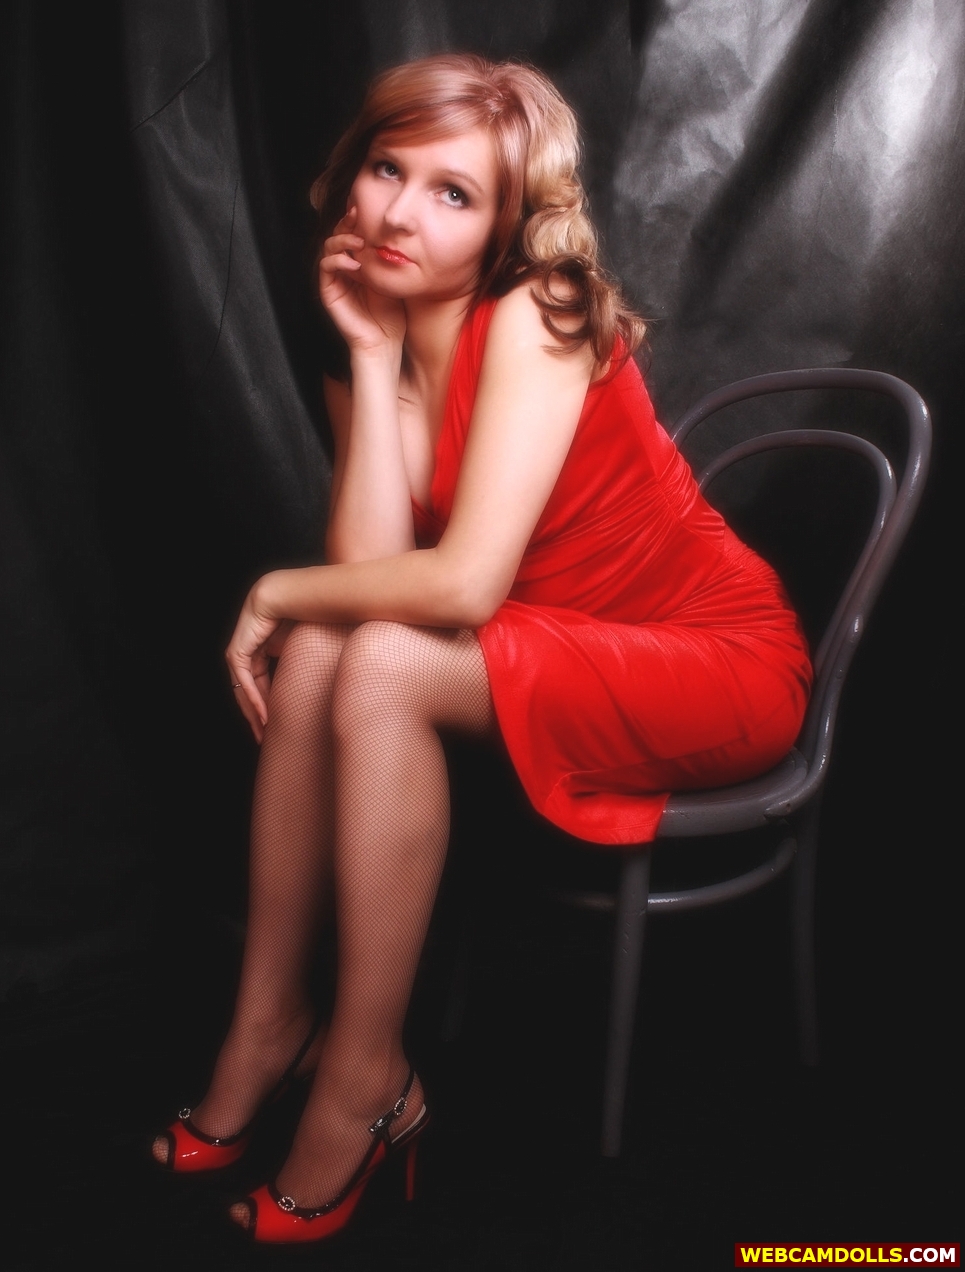 Blonde MILF in Tan Fishnet Pantyhose and Red Short Dress on Webcamdolls